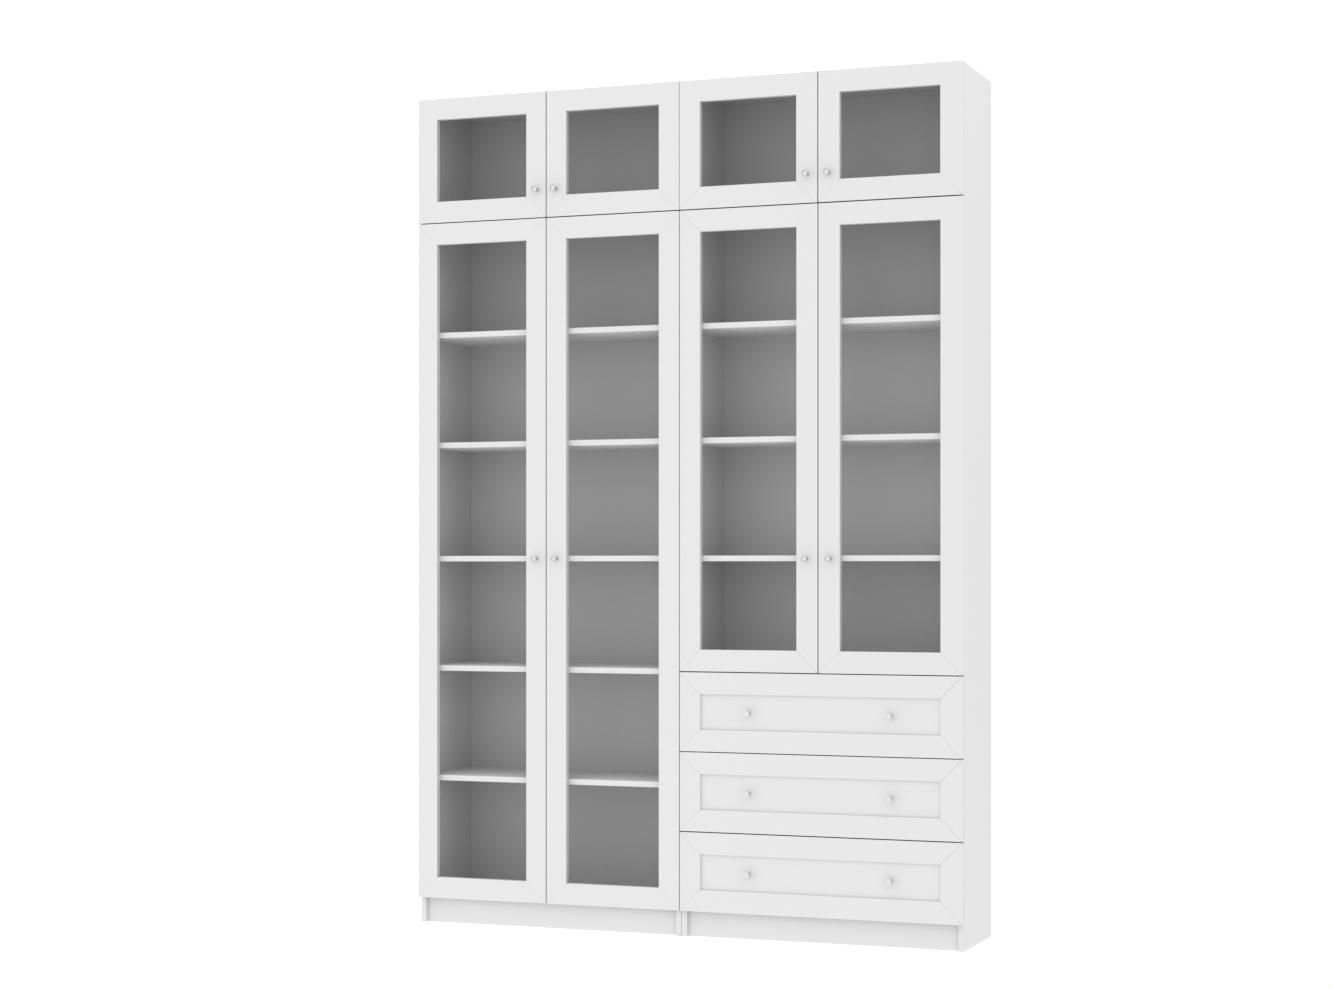 Книжный шкаф Билли 363 white ИКЕА (IKEA) изображение товара